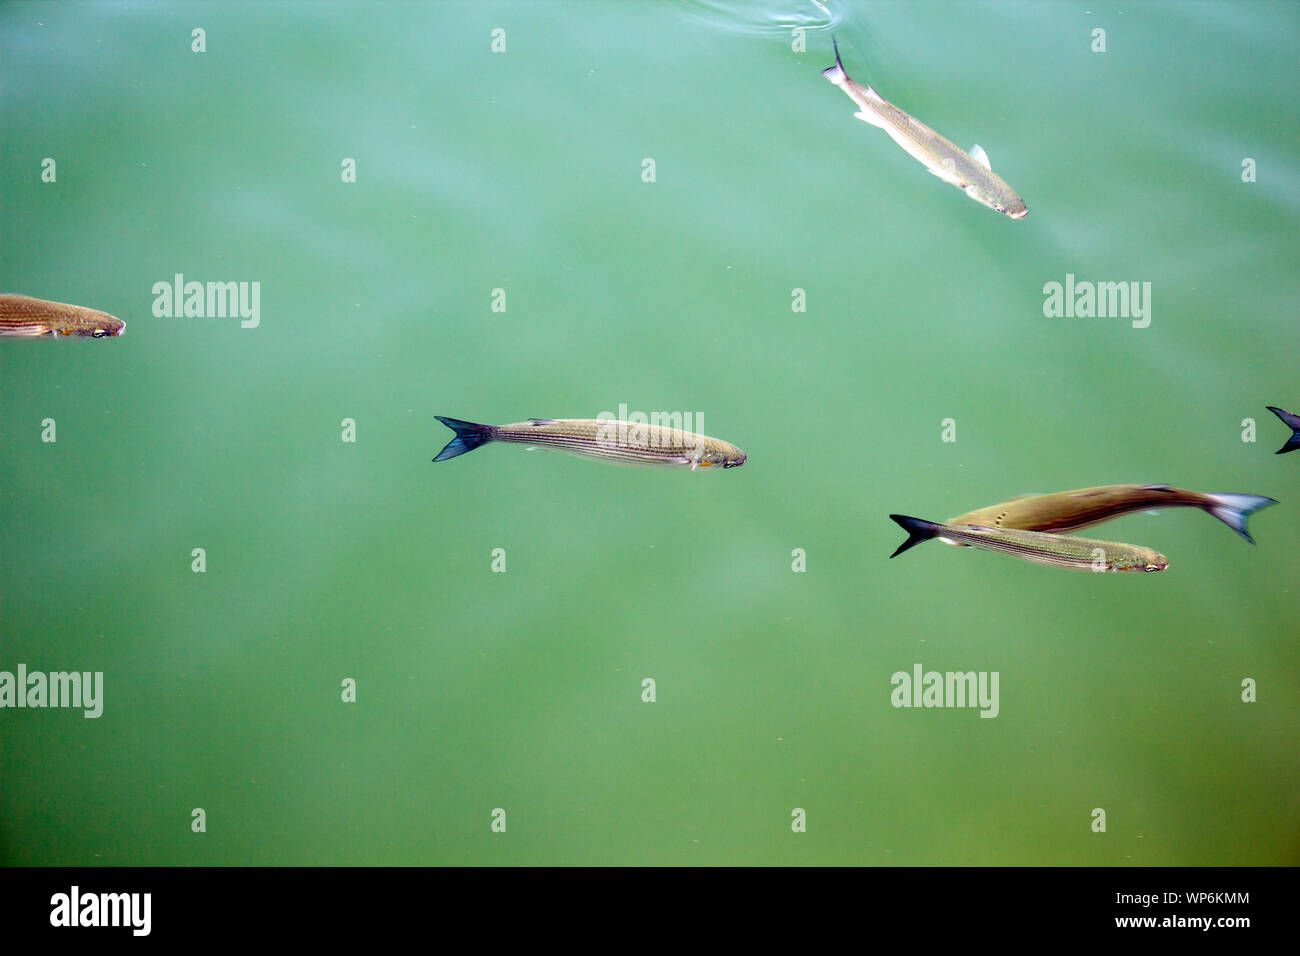 Flathead mullet fish swimming diagonally in creamy green murky water. Stock Photo